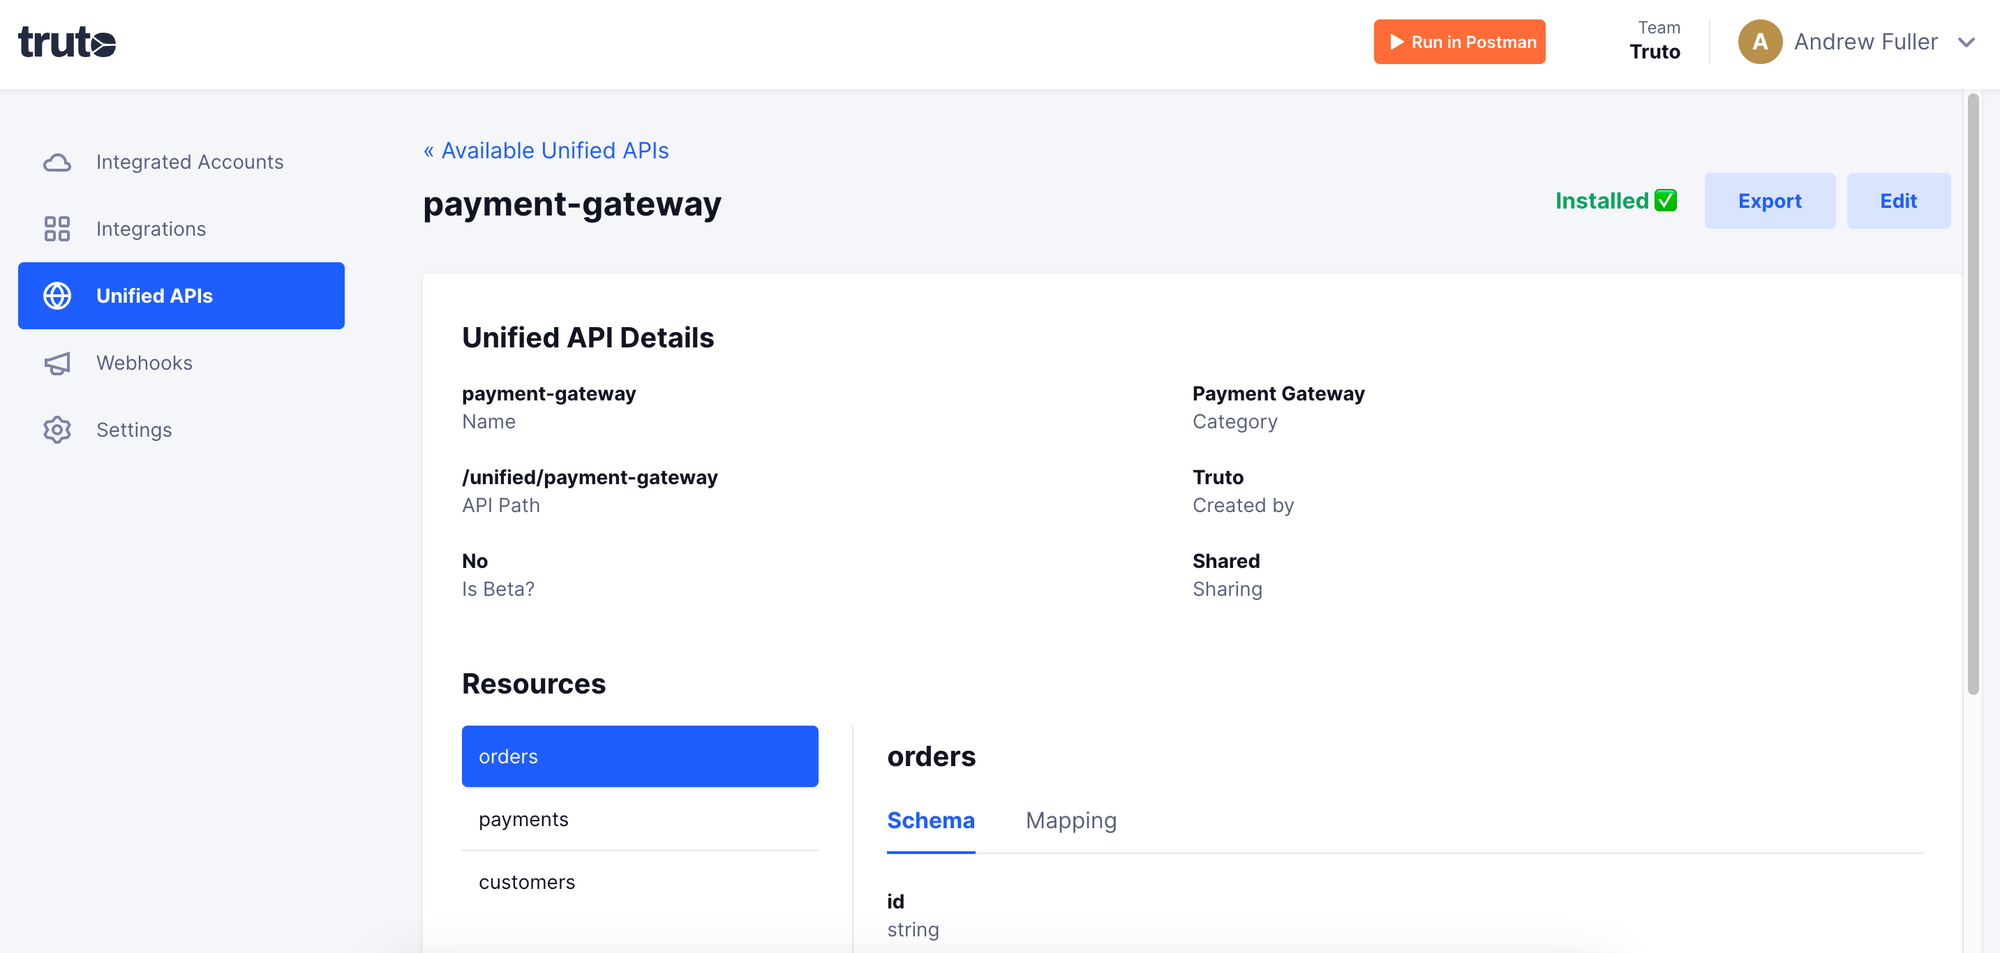 Launching: Payment Gateway Unified API